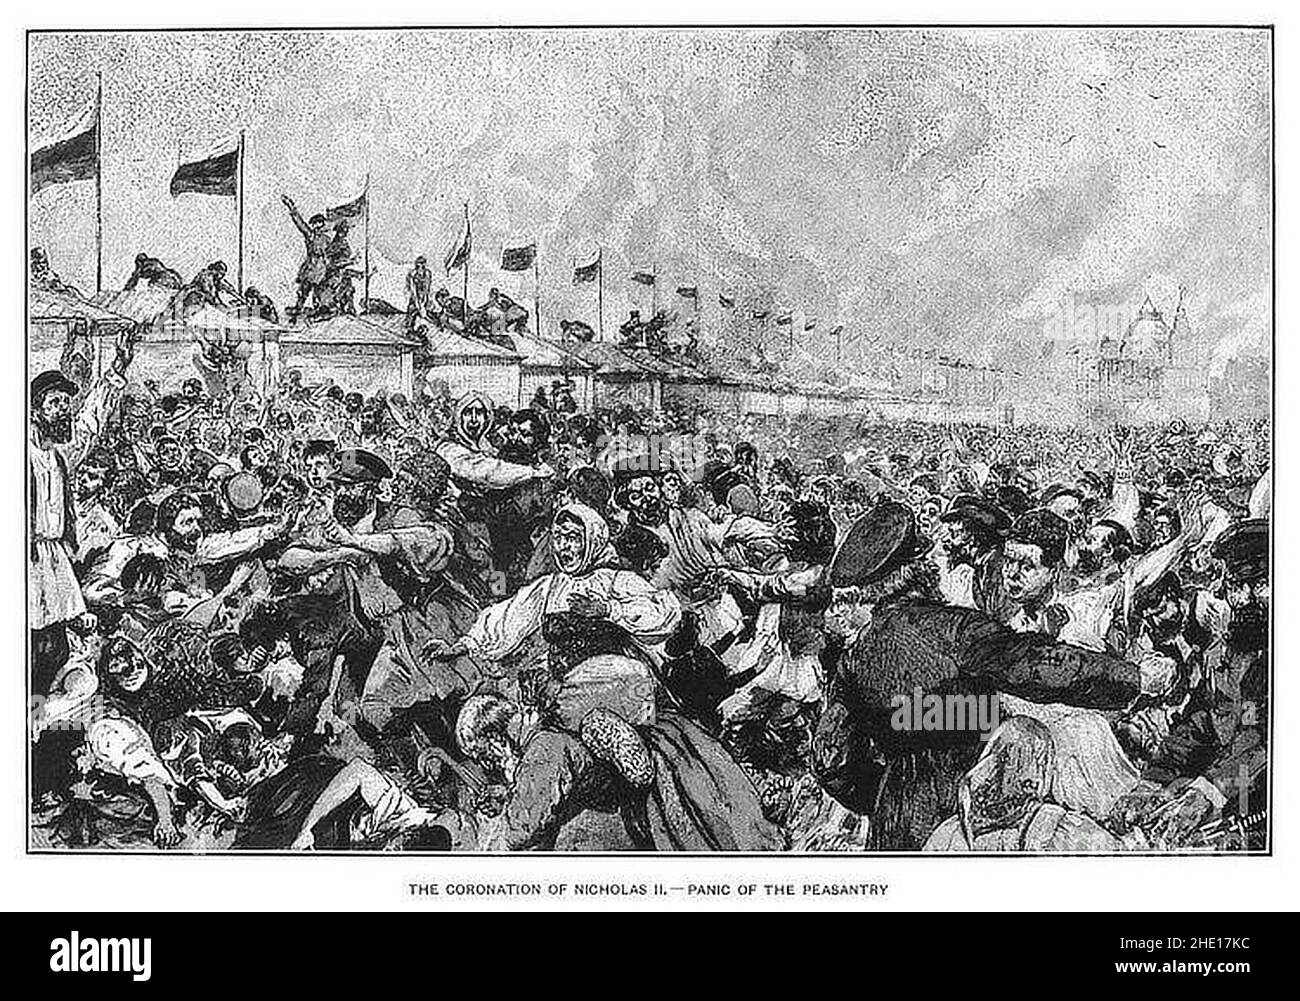 The Khodynka Tragedy - a stampede among the crowd on the Khodynka field during Tsar Nicholas II's coronation killed around 1300 and left many more injured Stock Photo